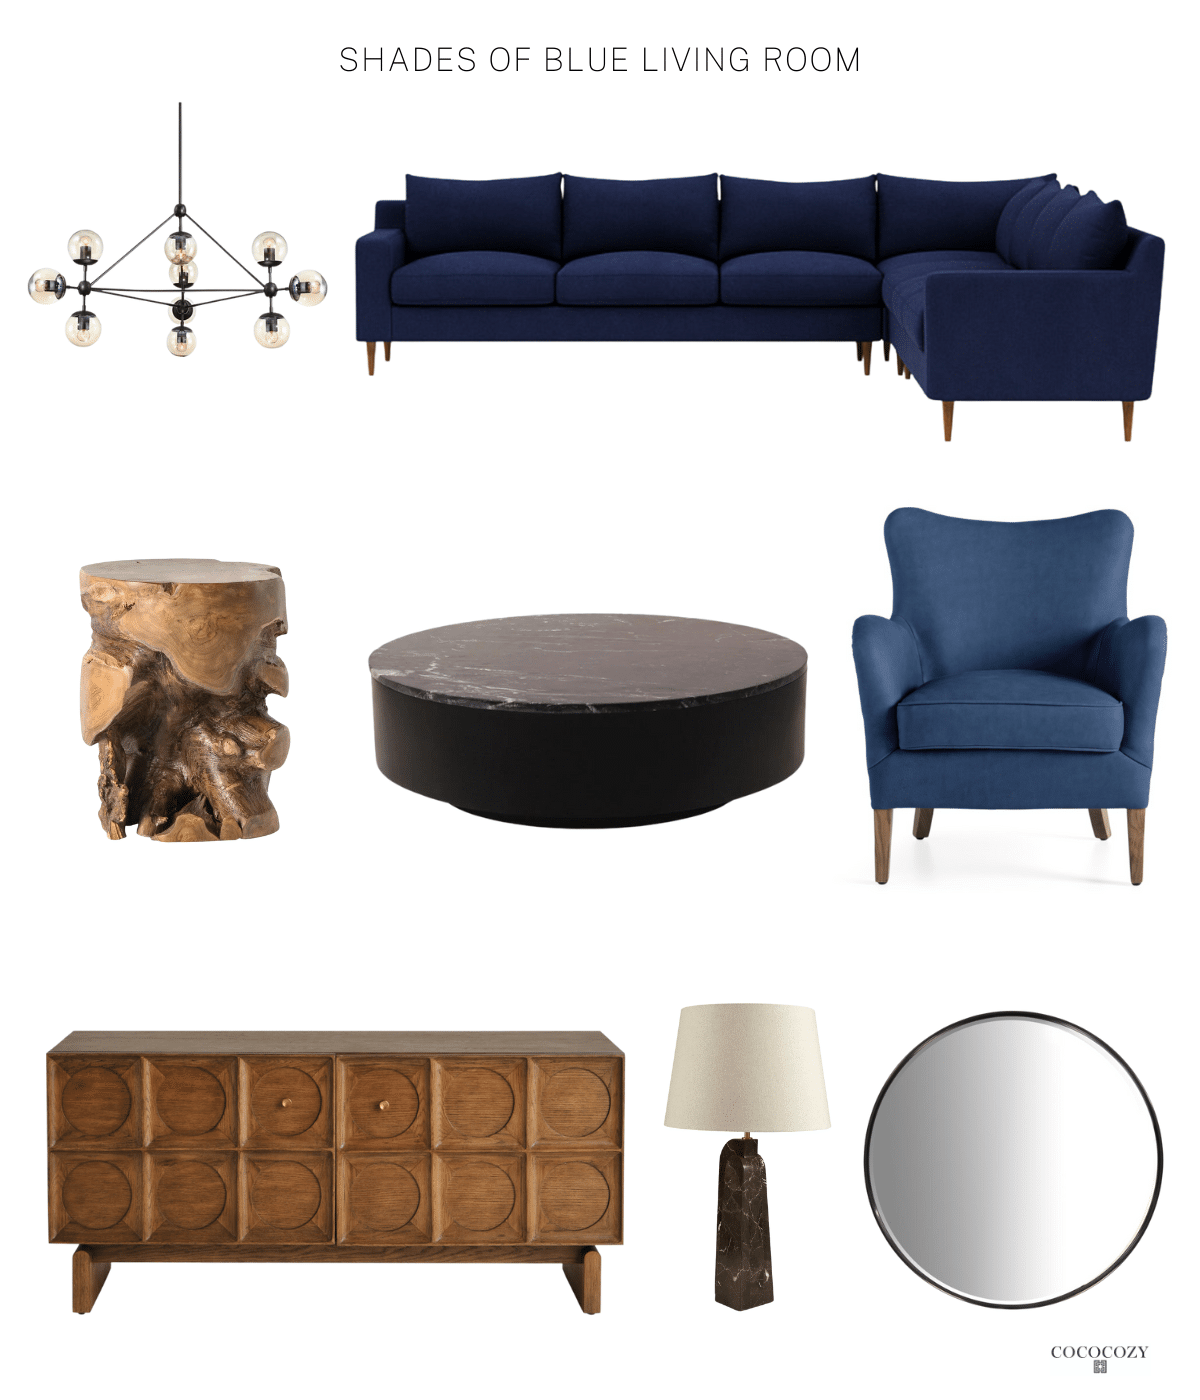 Alt tag for blue-living-room-interior-design-moodboard-media-console-sofa-chandelier-cococozy